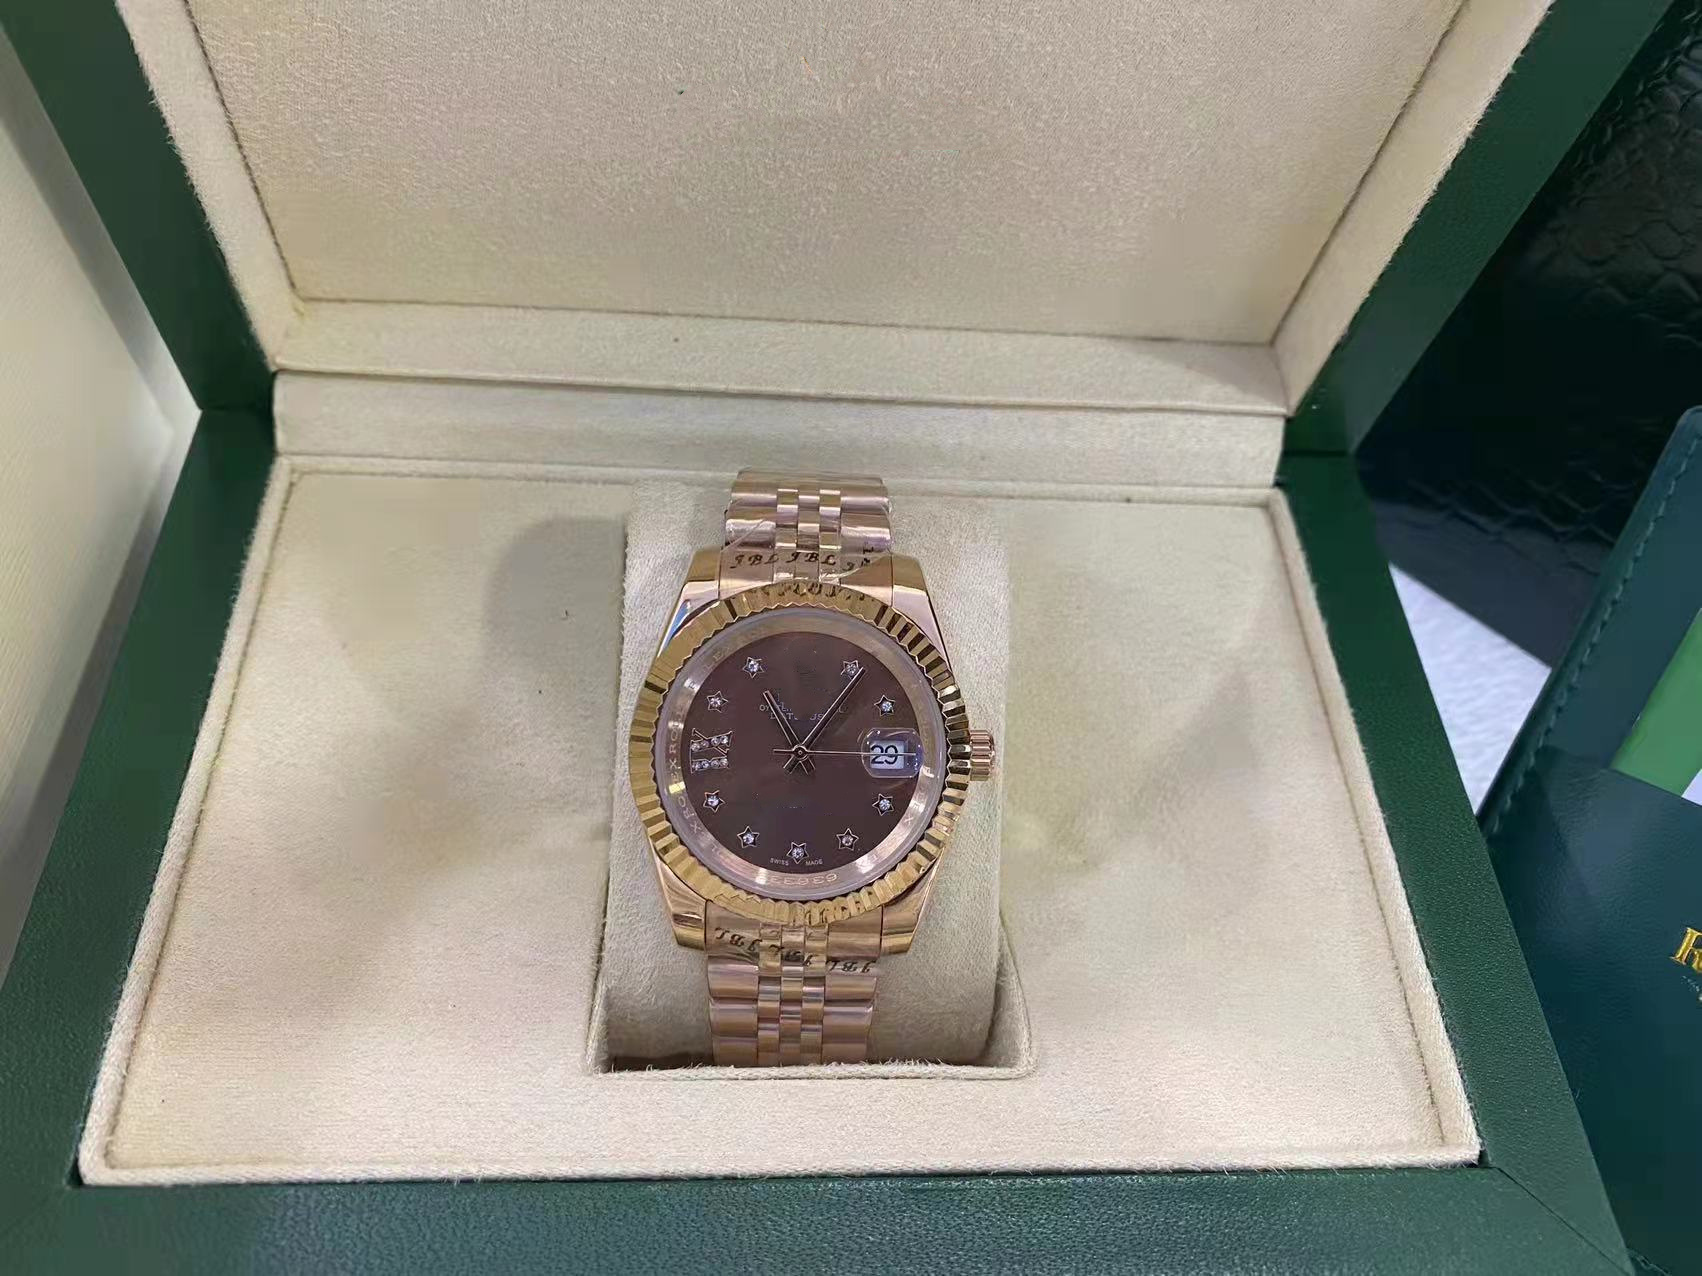 

With Original Box Luxury Watches 41MM 18K Gold Dark Rhodium Index Dial Automatic Fashion Brand Men's Watch Wristwatch, Style 1 original box + watch